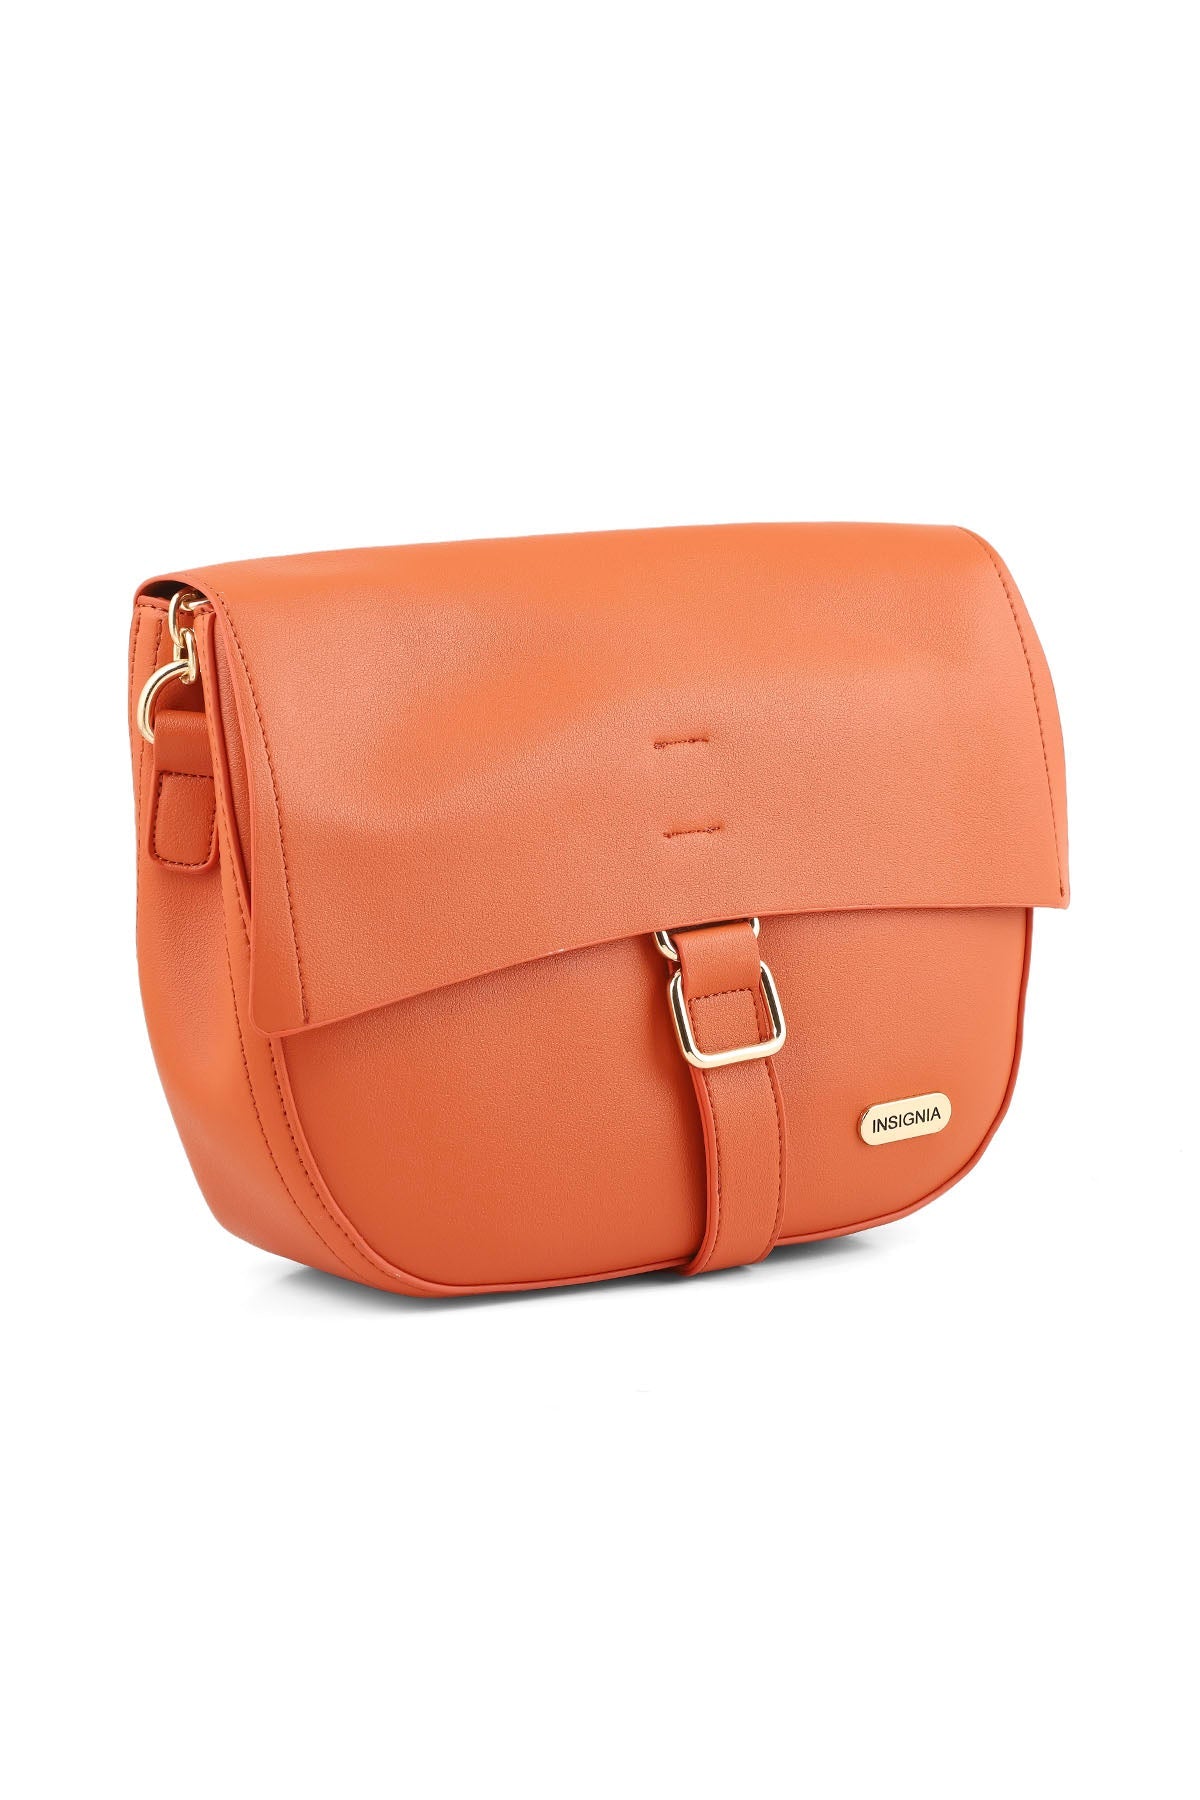 Cross Shoulder Bags B15065-Orange